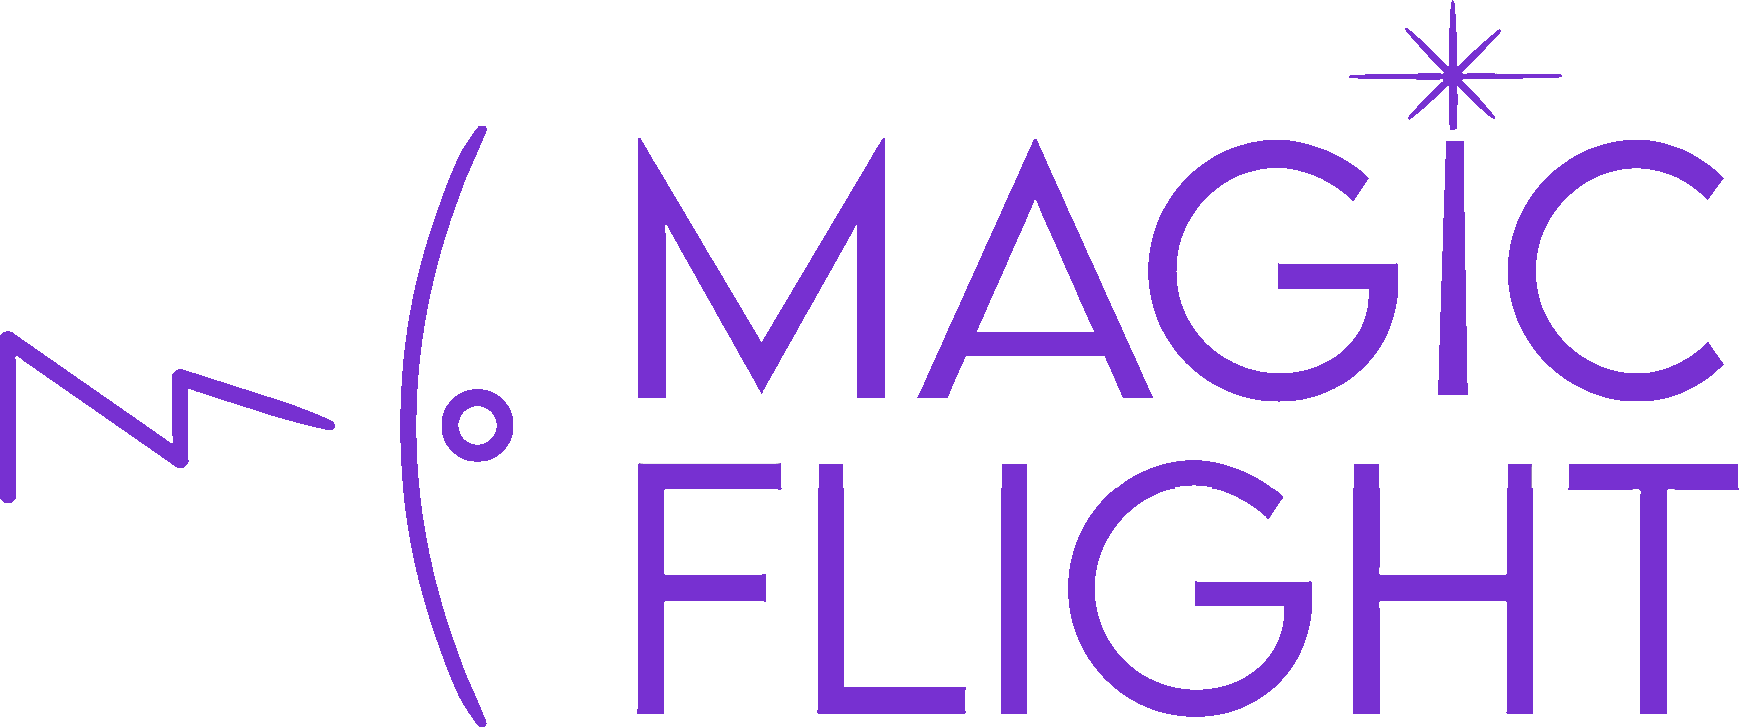 Magic Flight Launch Box Vaporizer - BOOM Headshop